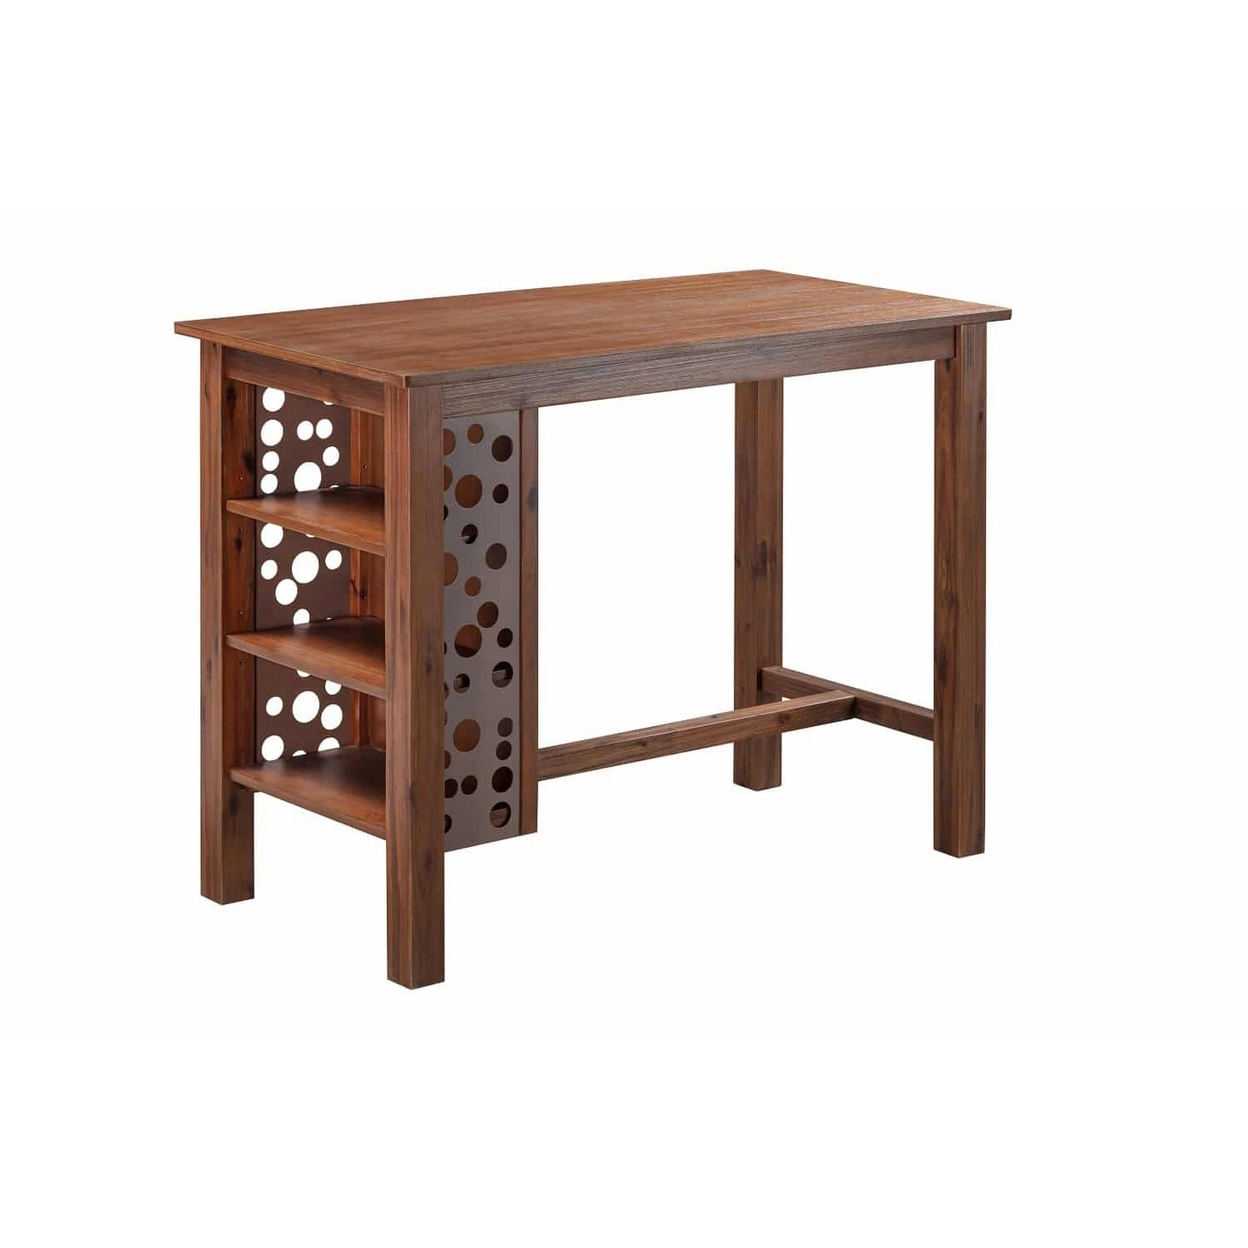 Bada 47 Inch Rectangular Bar Table With 3 Shelves And Metal Accents, Brown - Saltoro Sherpi